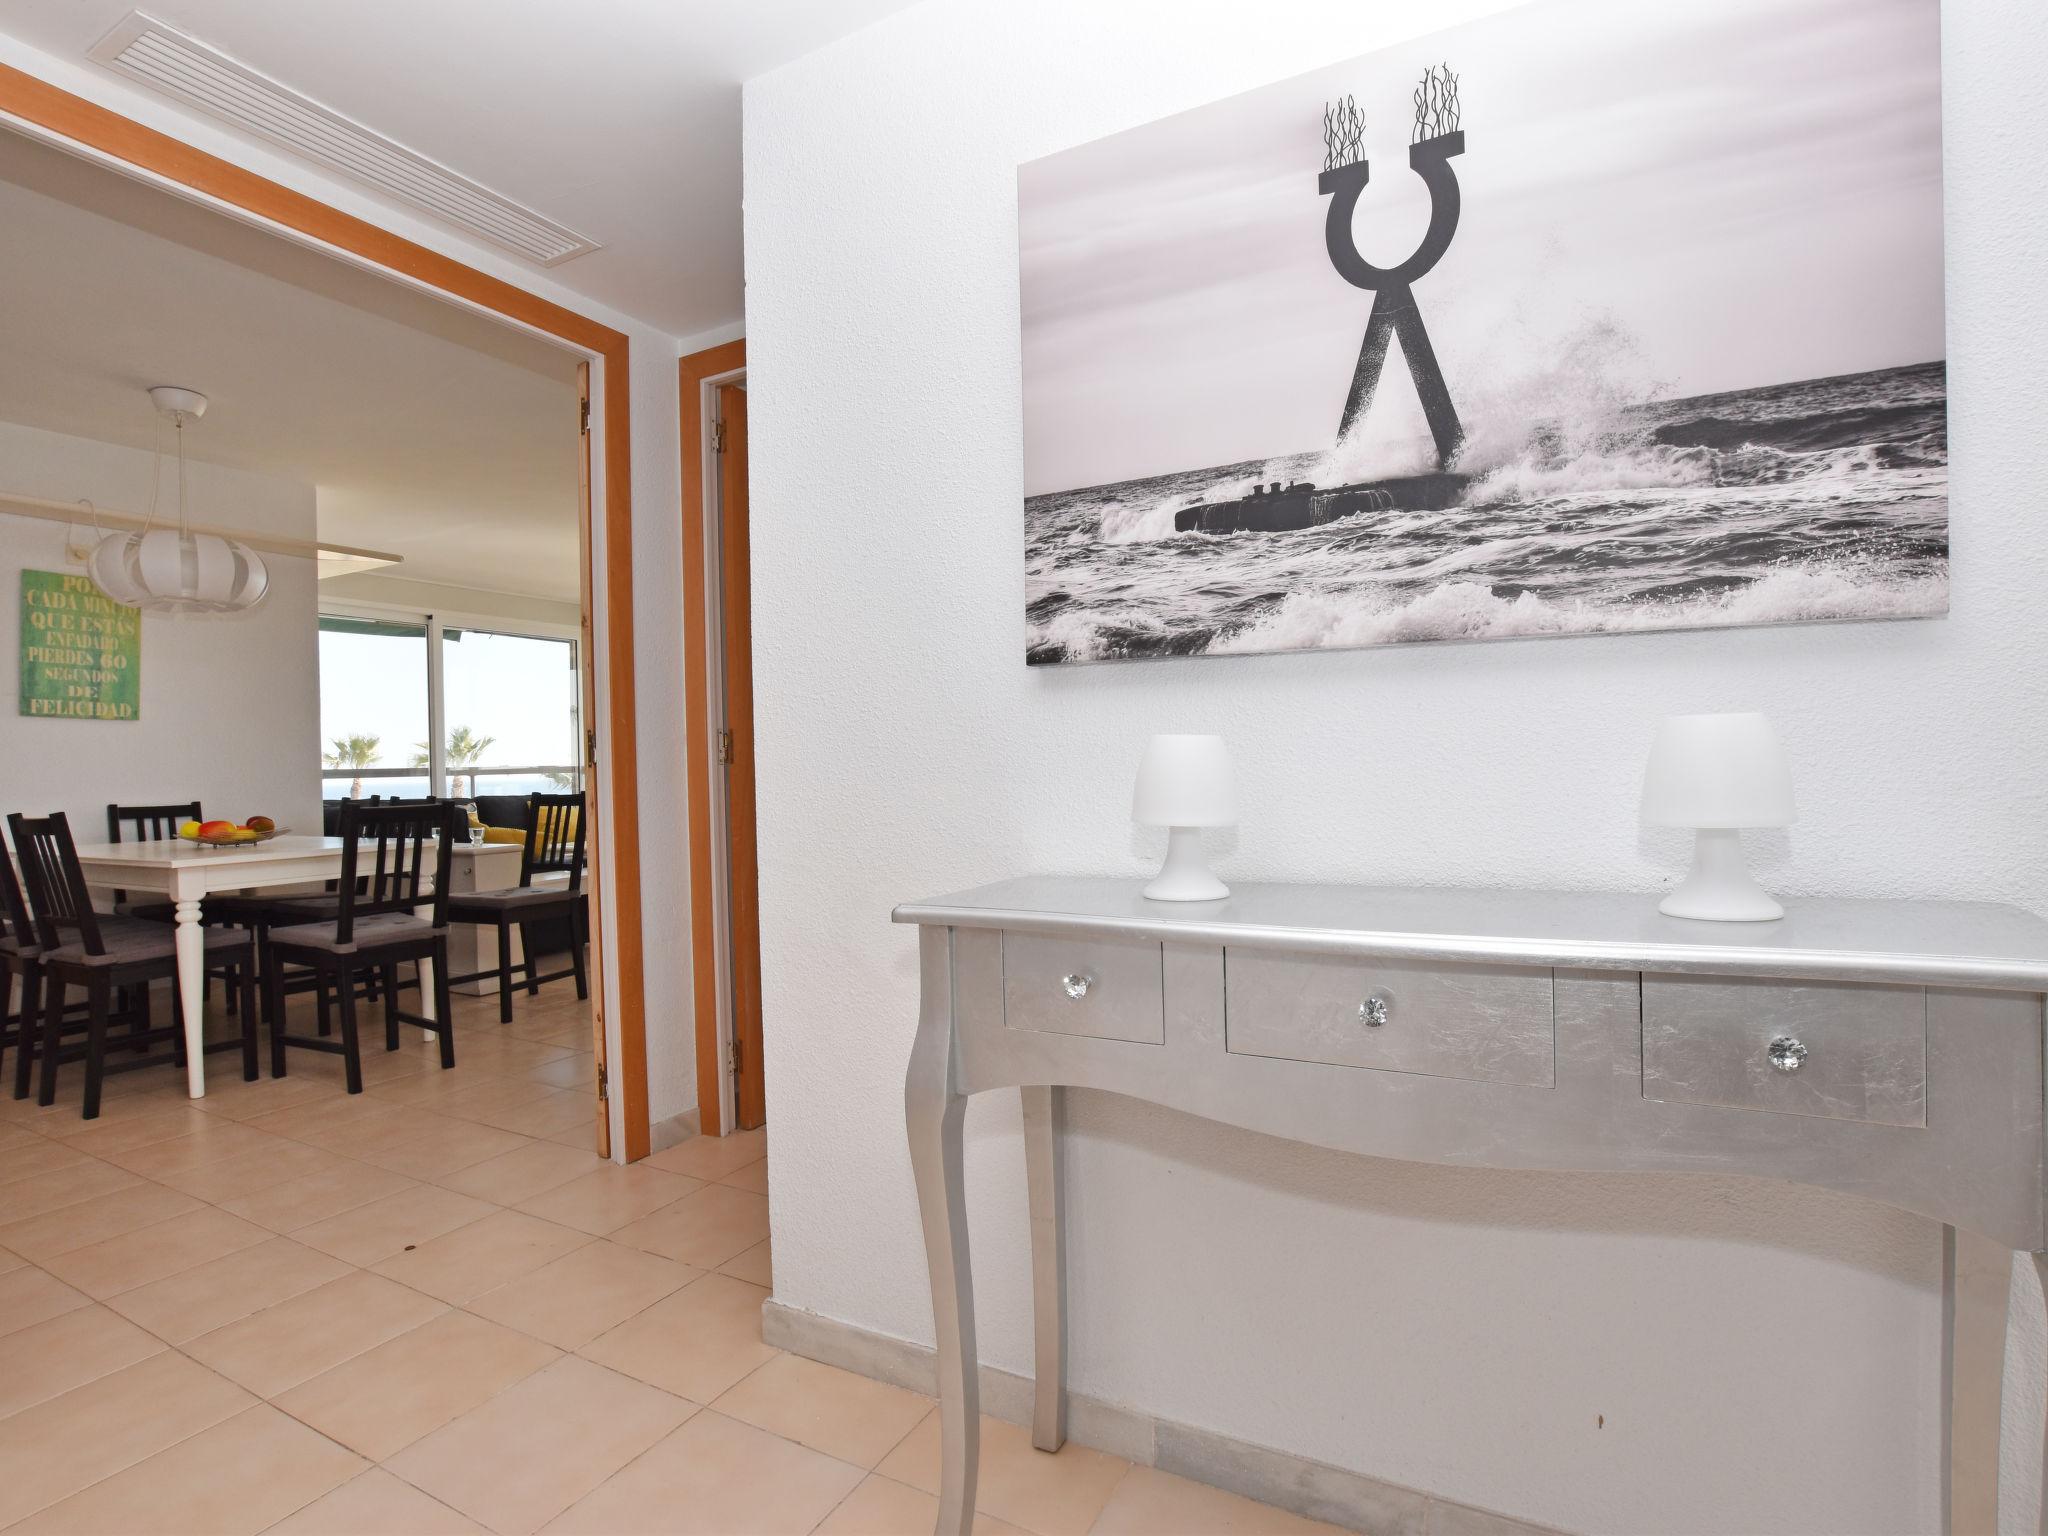 Photo 8 - Appartement de 4 chambres à Torredembarra avec piscine et vues à la mer